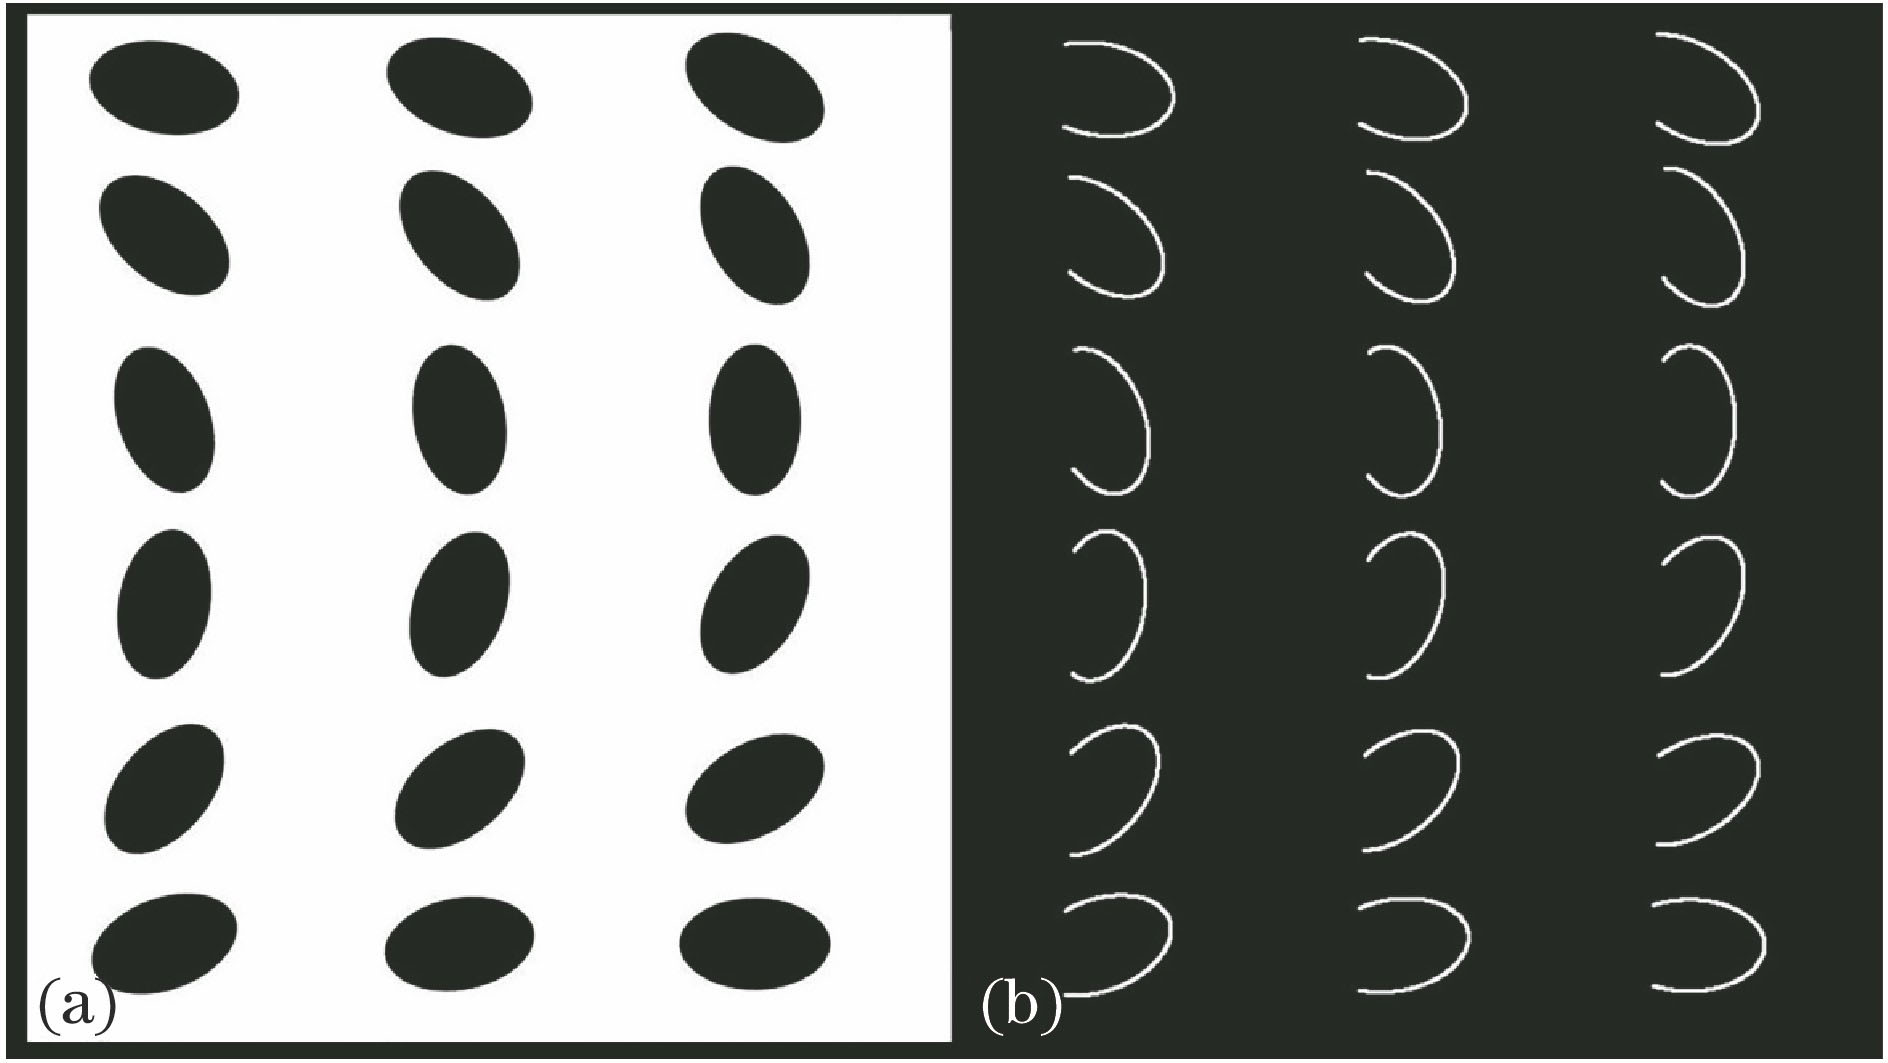 Simulated images. (a) Complete ellipses; (b) fragmental ellipses